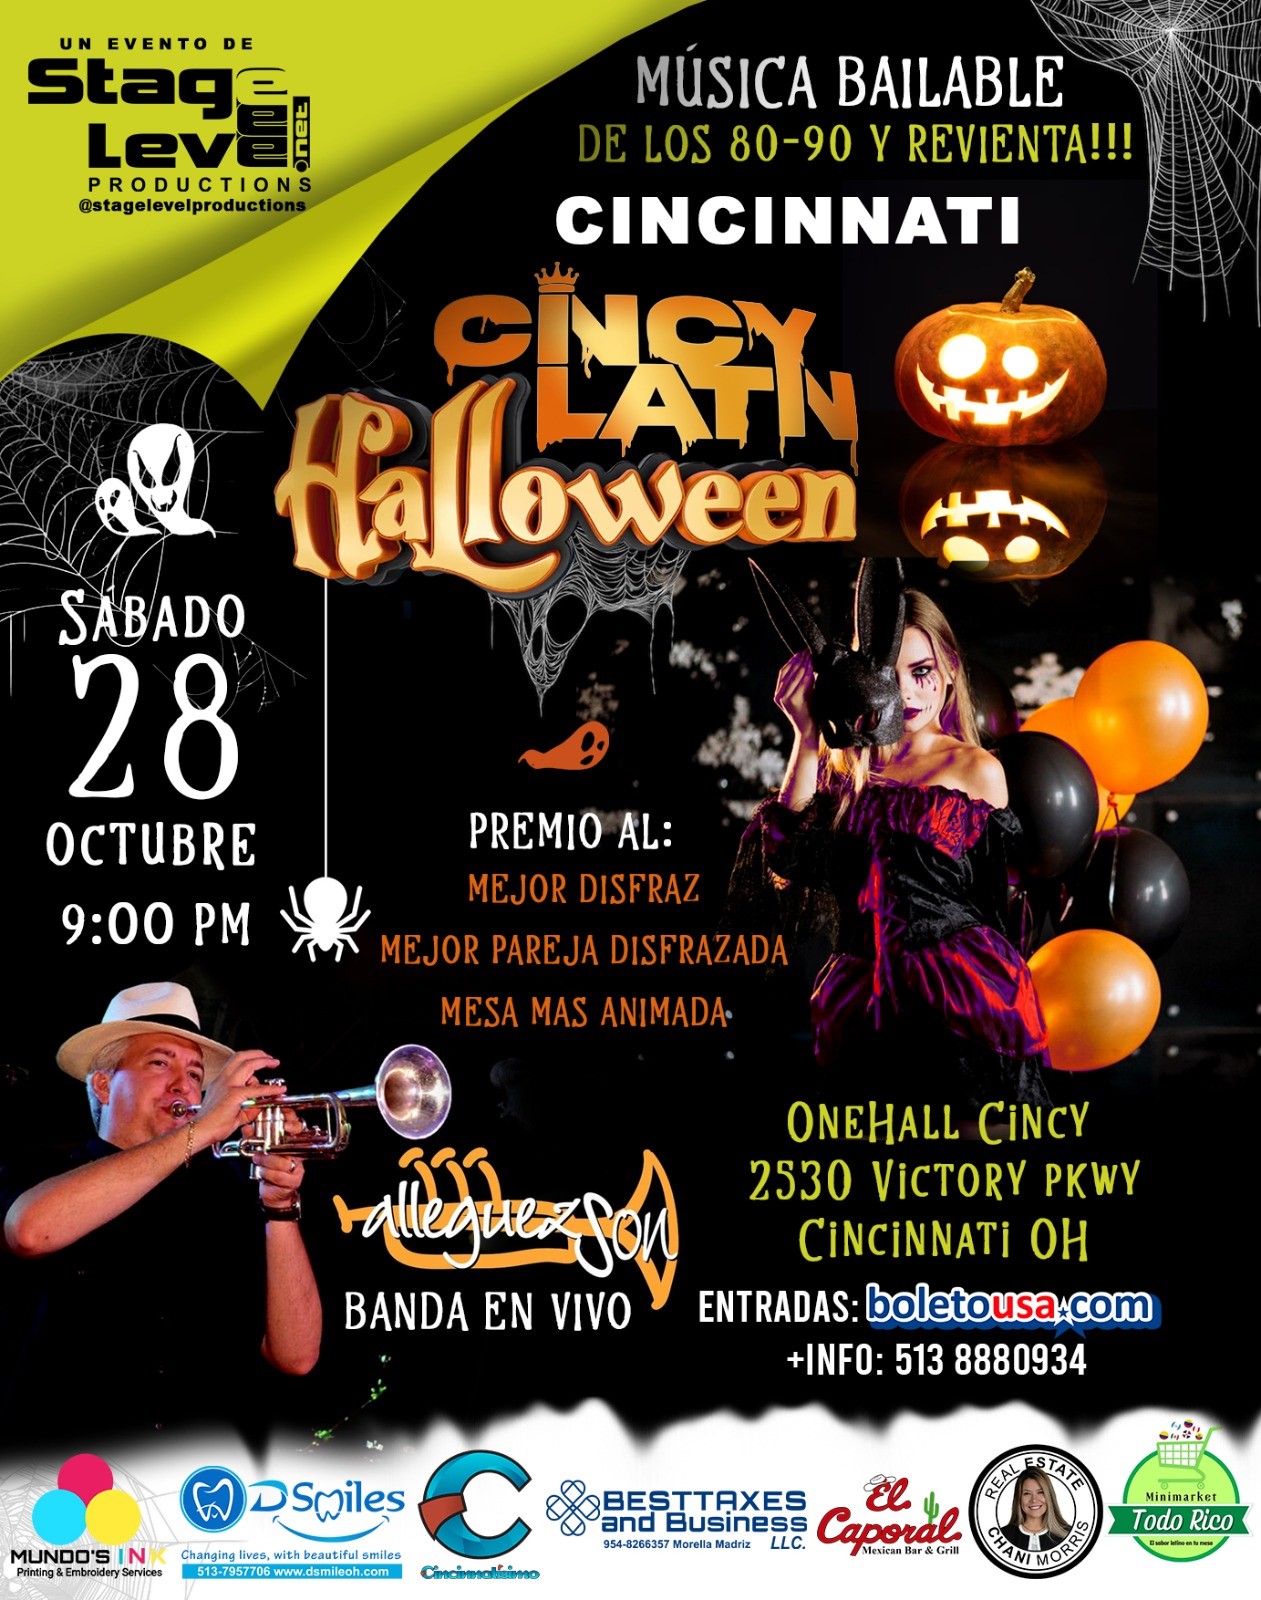 Cincy Latin Halloween Joel Alleguez con su Banda en Vivo !!! on oct. 28, 21:00@One Hall Cincy - Choisissez un siège,Achetez des billets et obtenez des informations surstagelevel net stagelevel.net